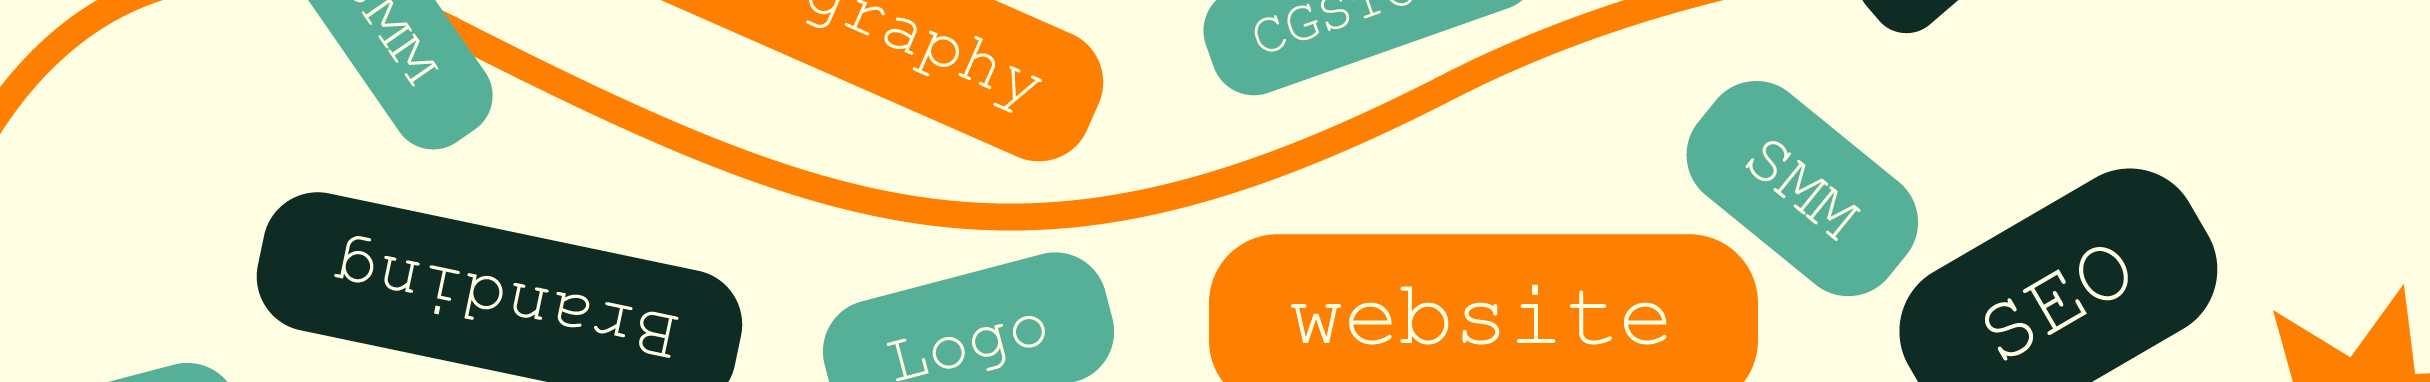 CG Store's profile banner